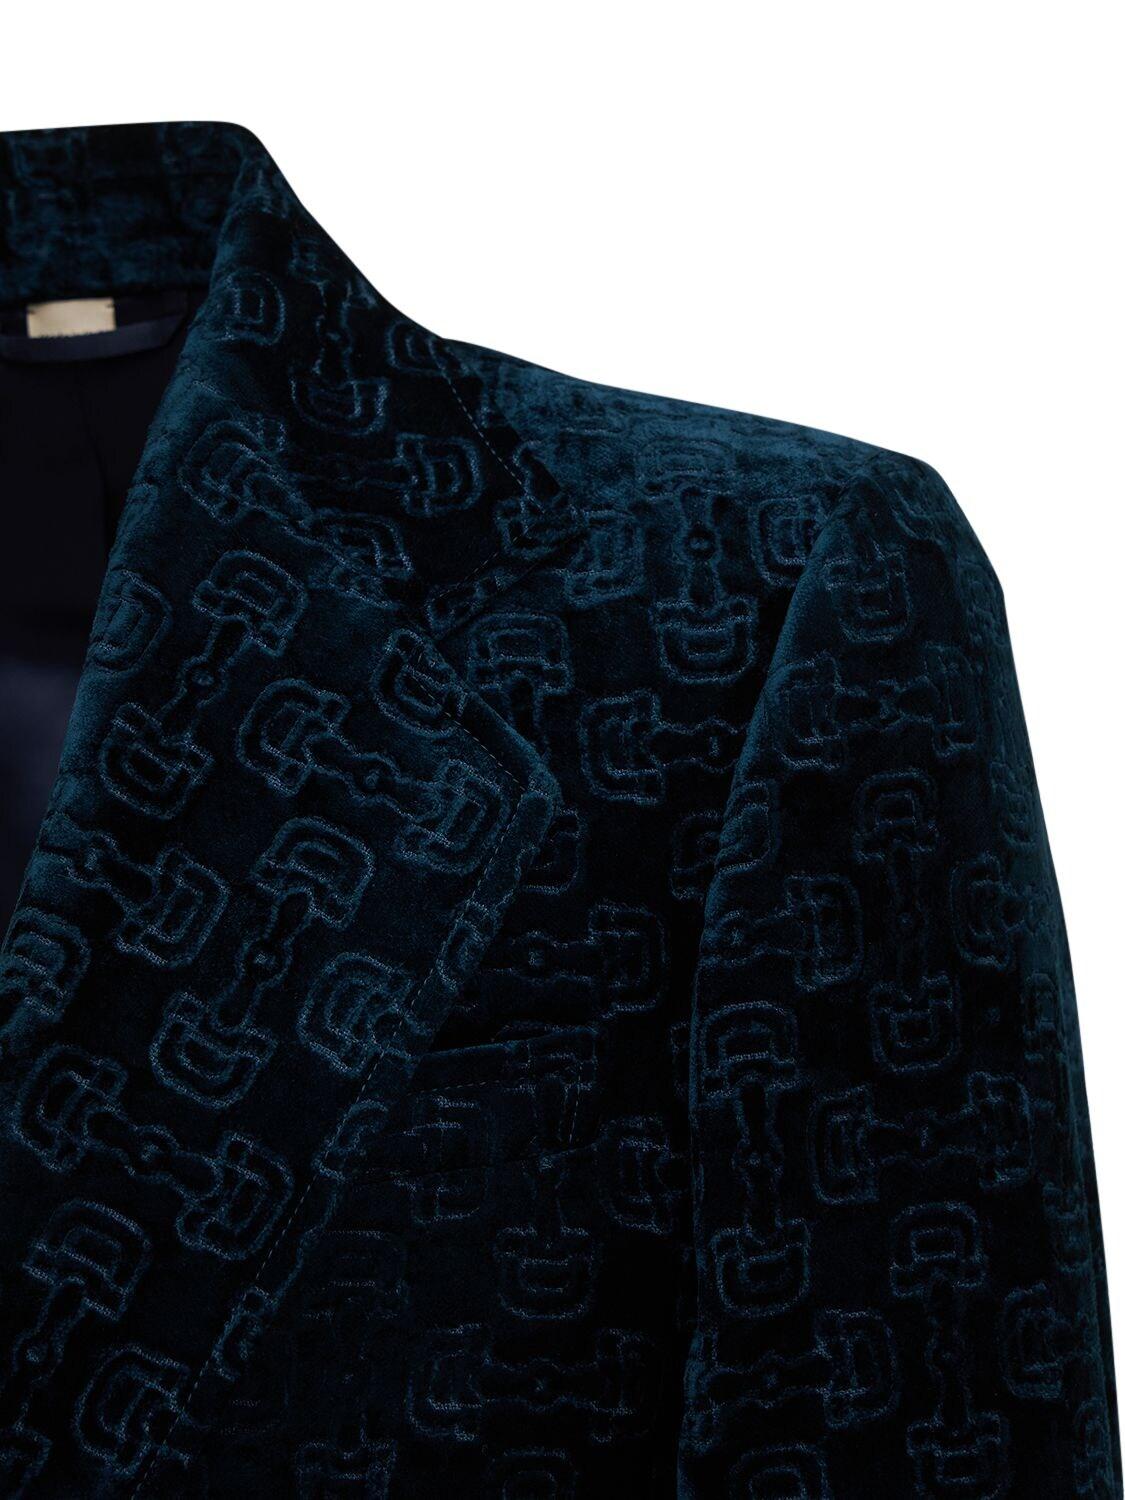 Gucci Horsebit Jacquard Wool Jacket